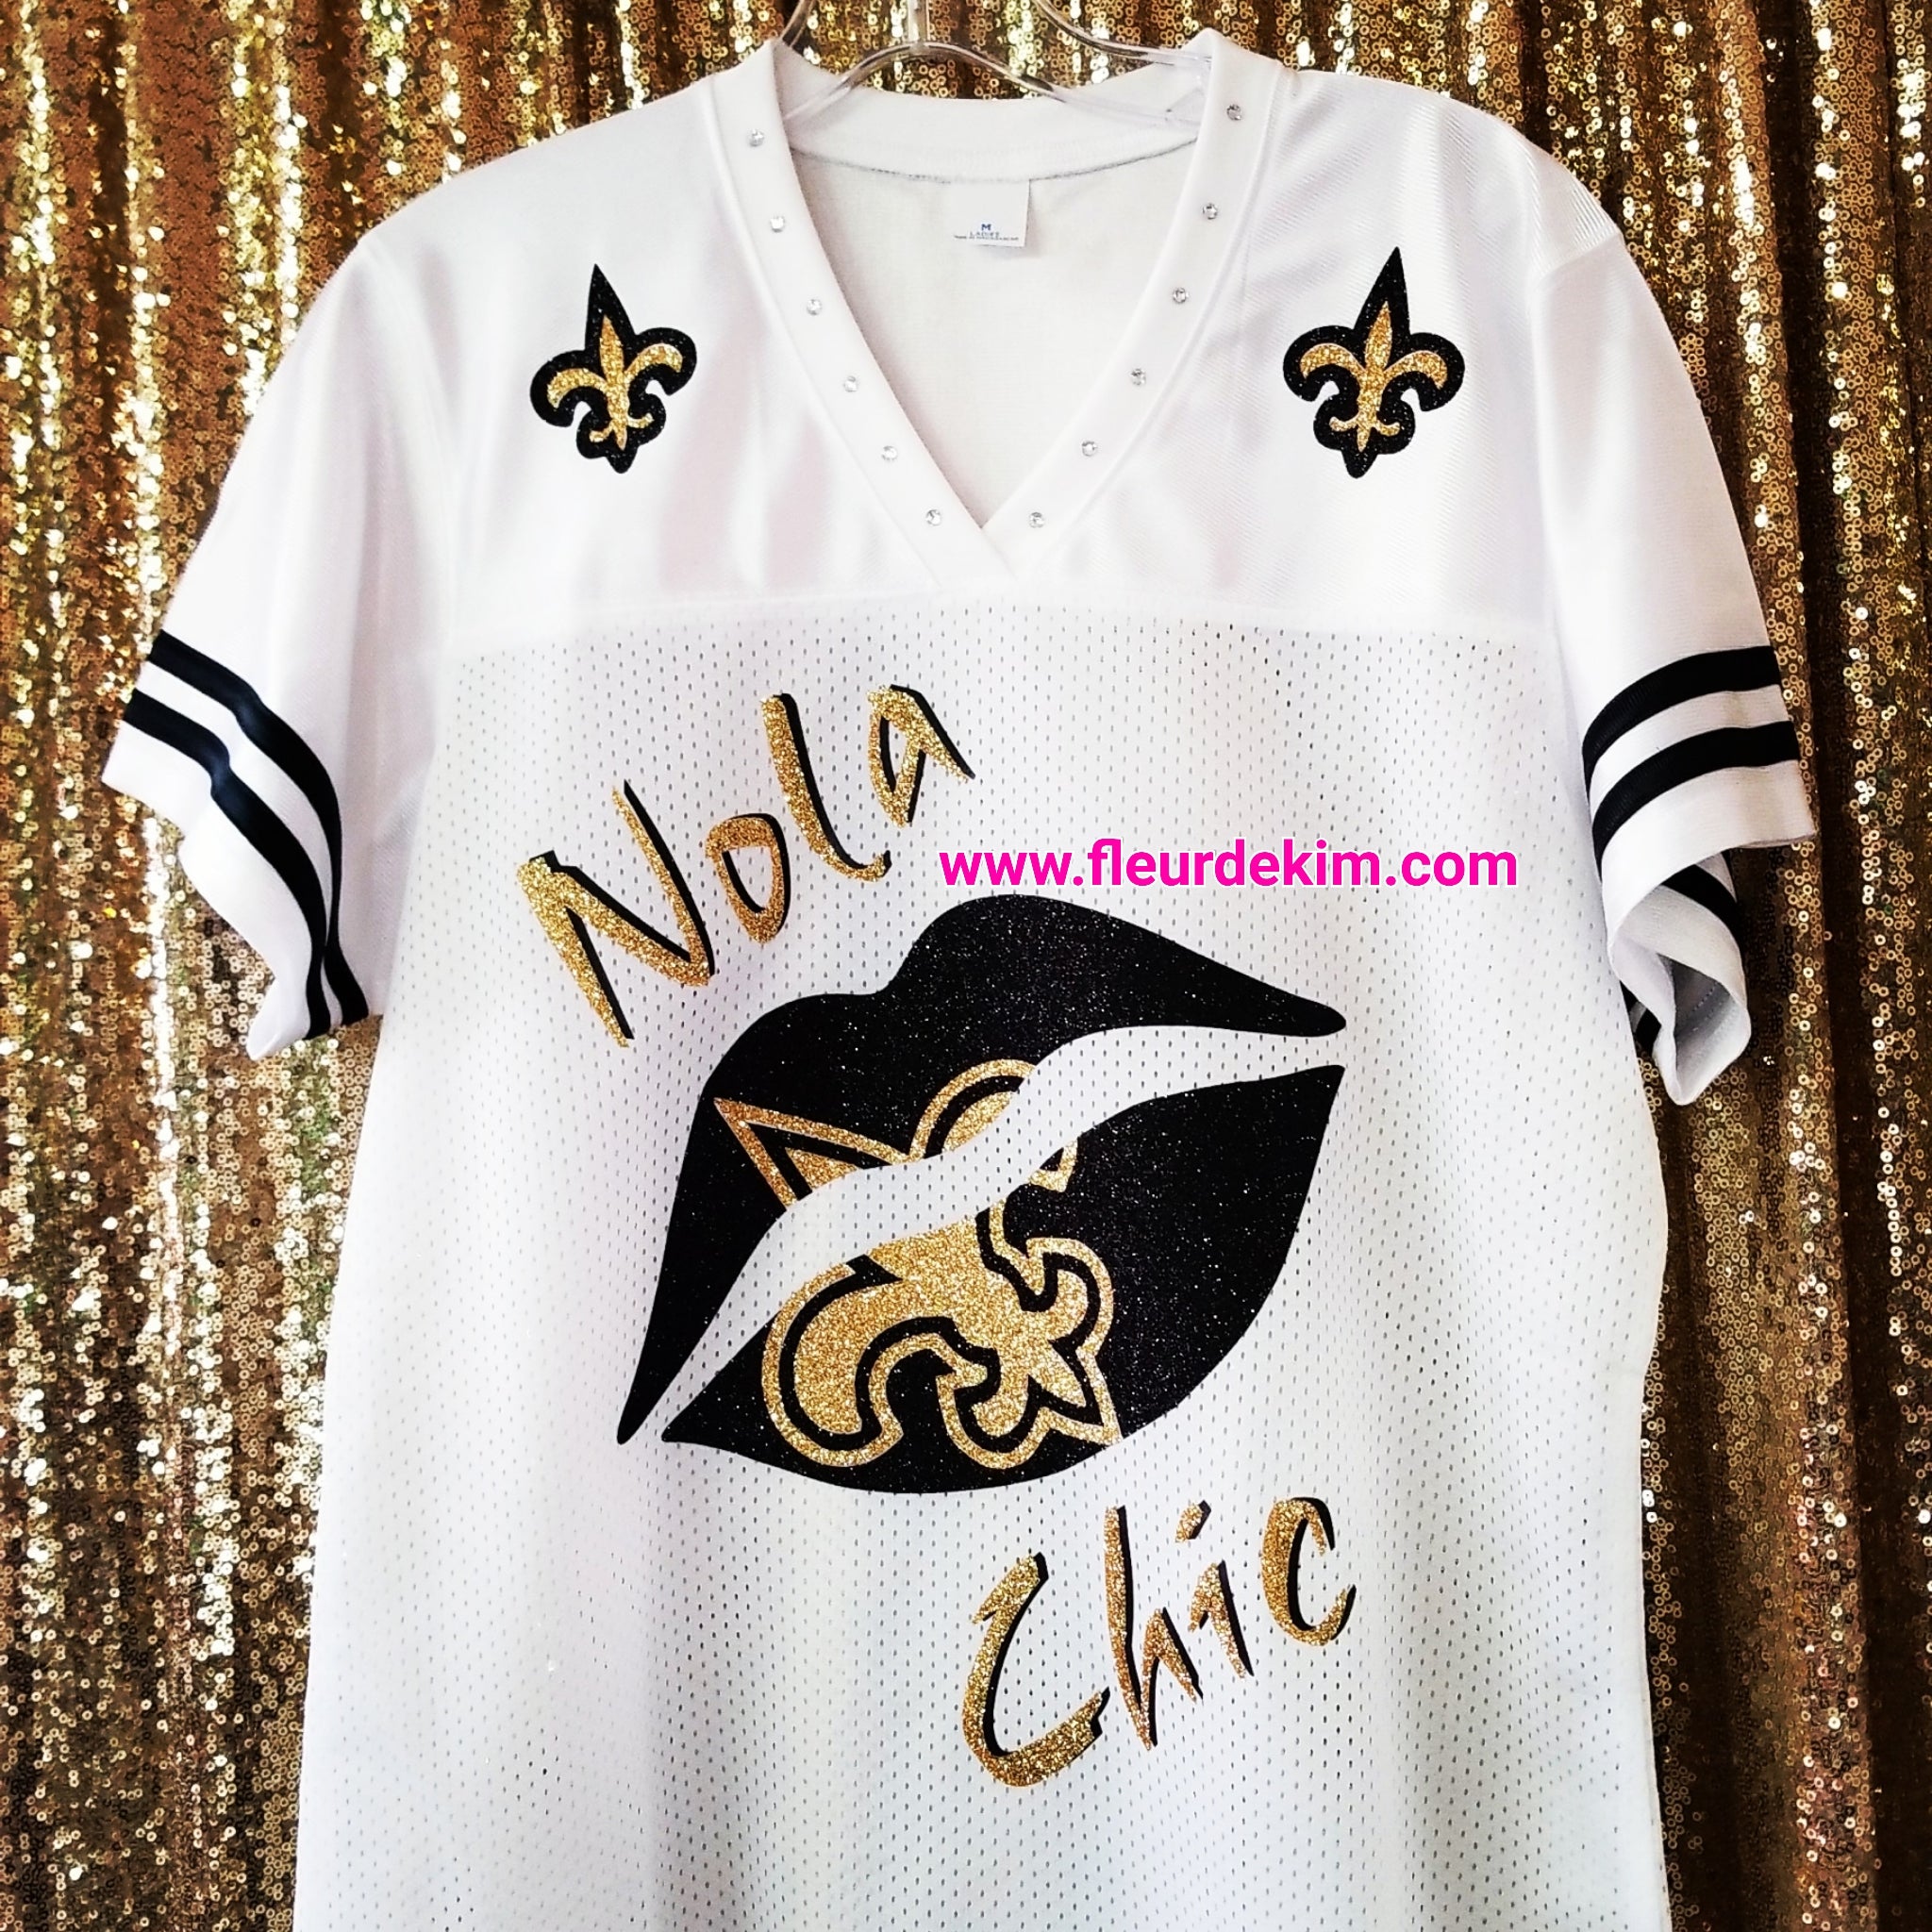 #bling jersey "Nola Chic"